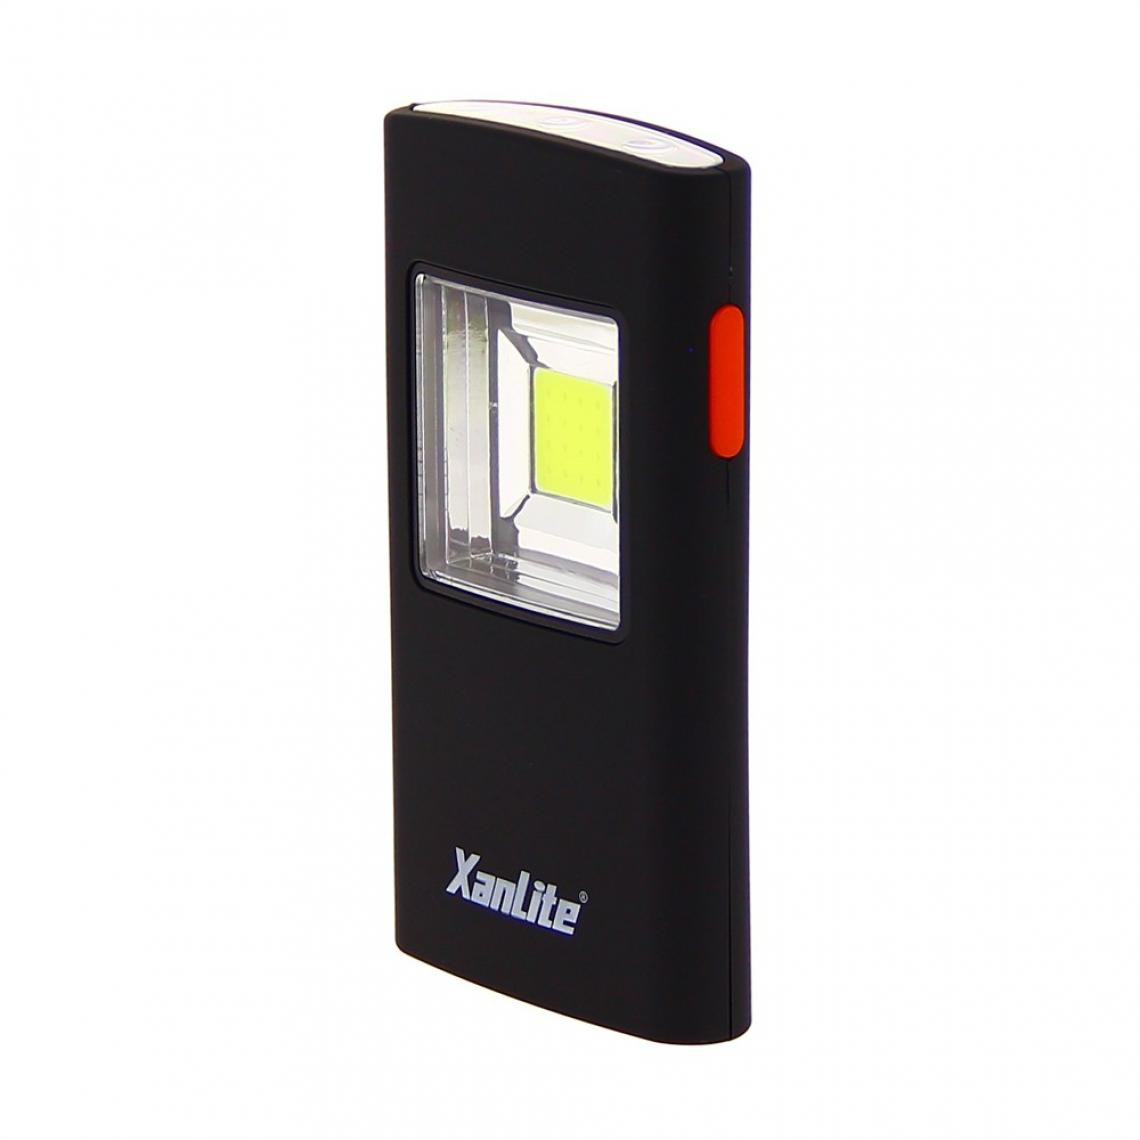 Xanlite - Lampe de Poche LED - Lampes portatives sans fil